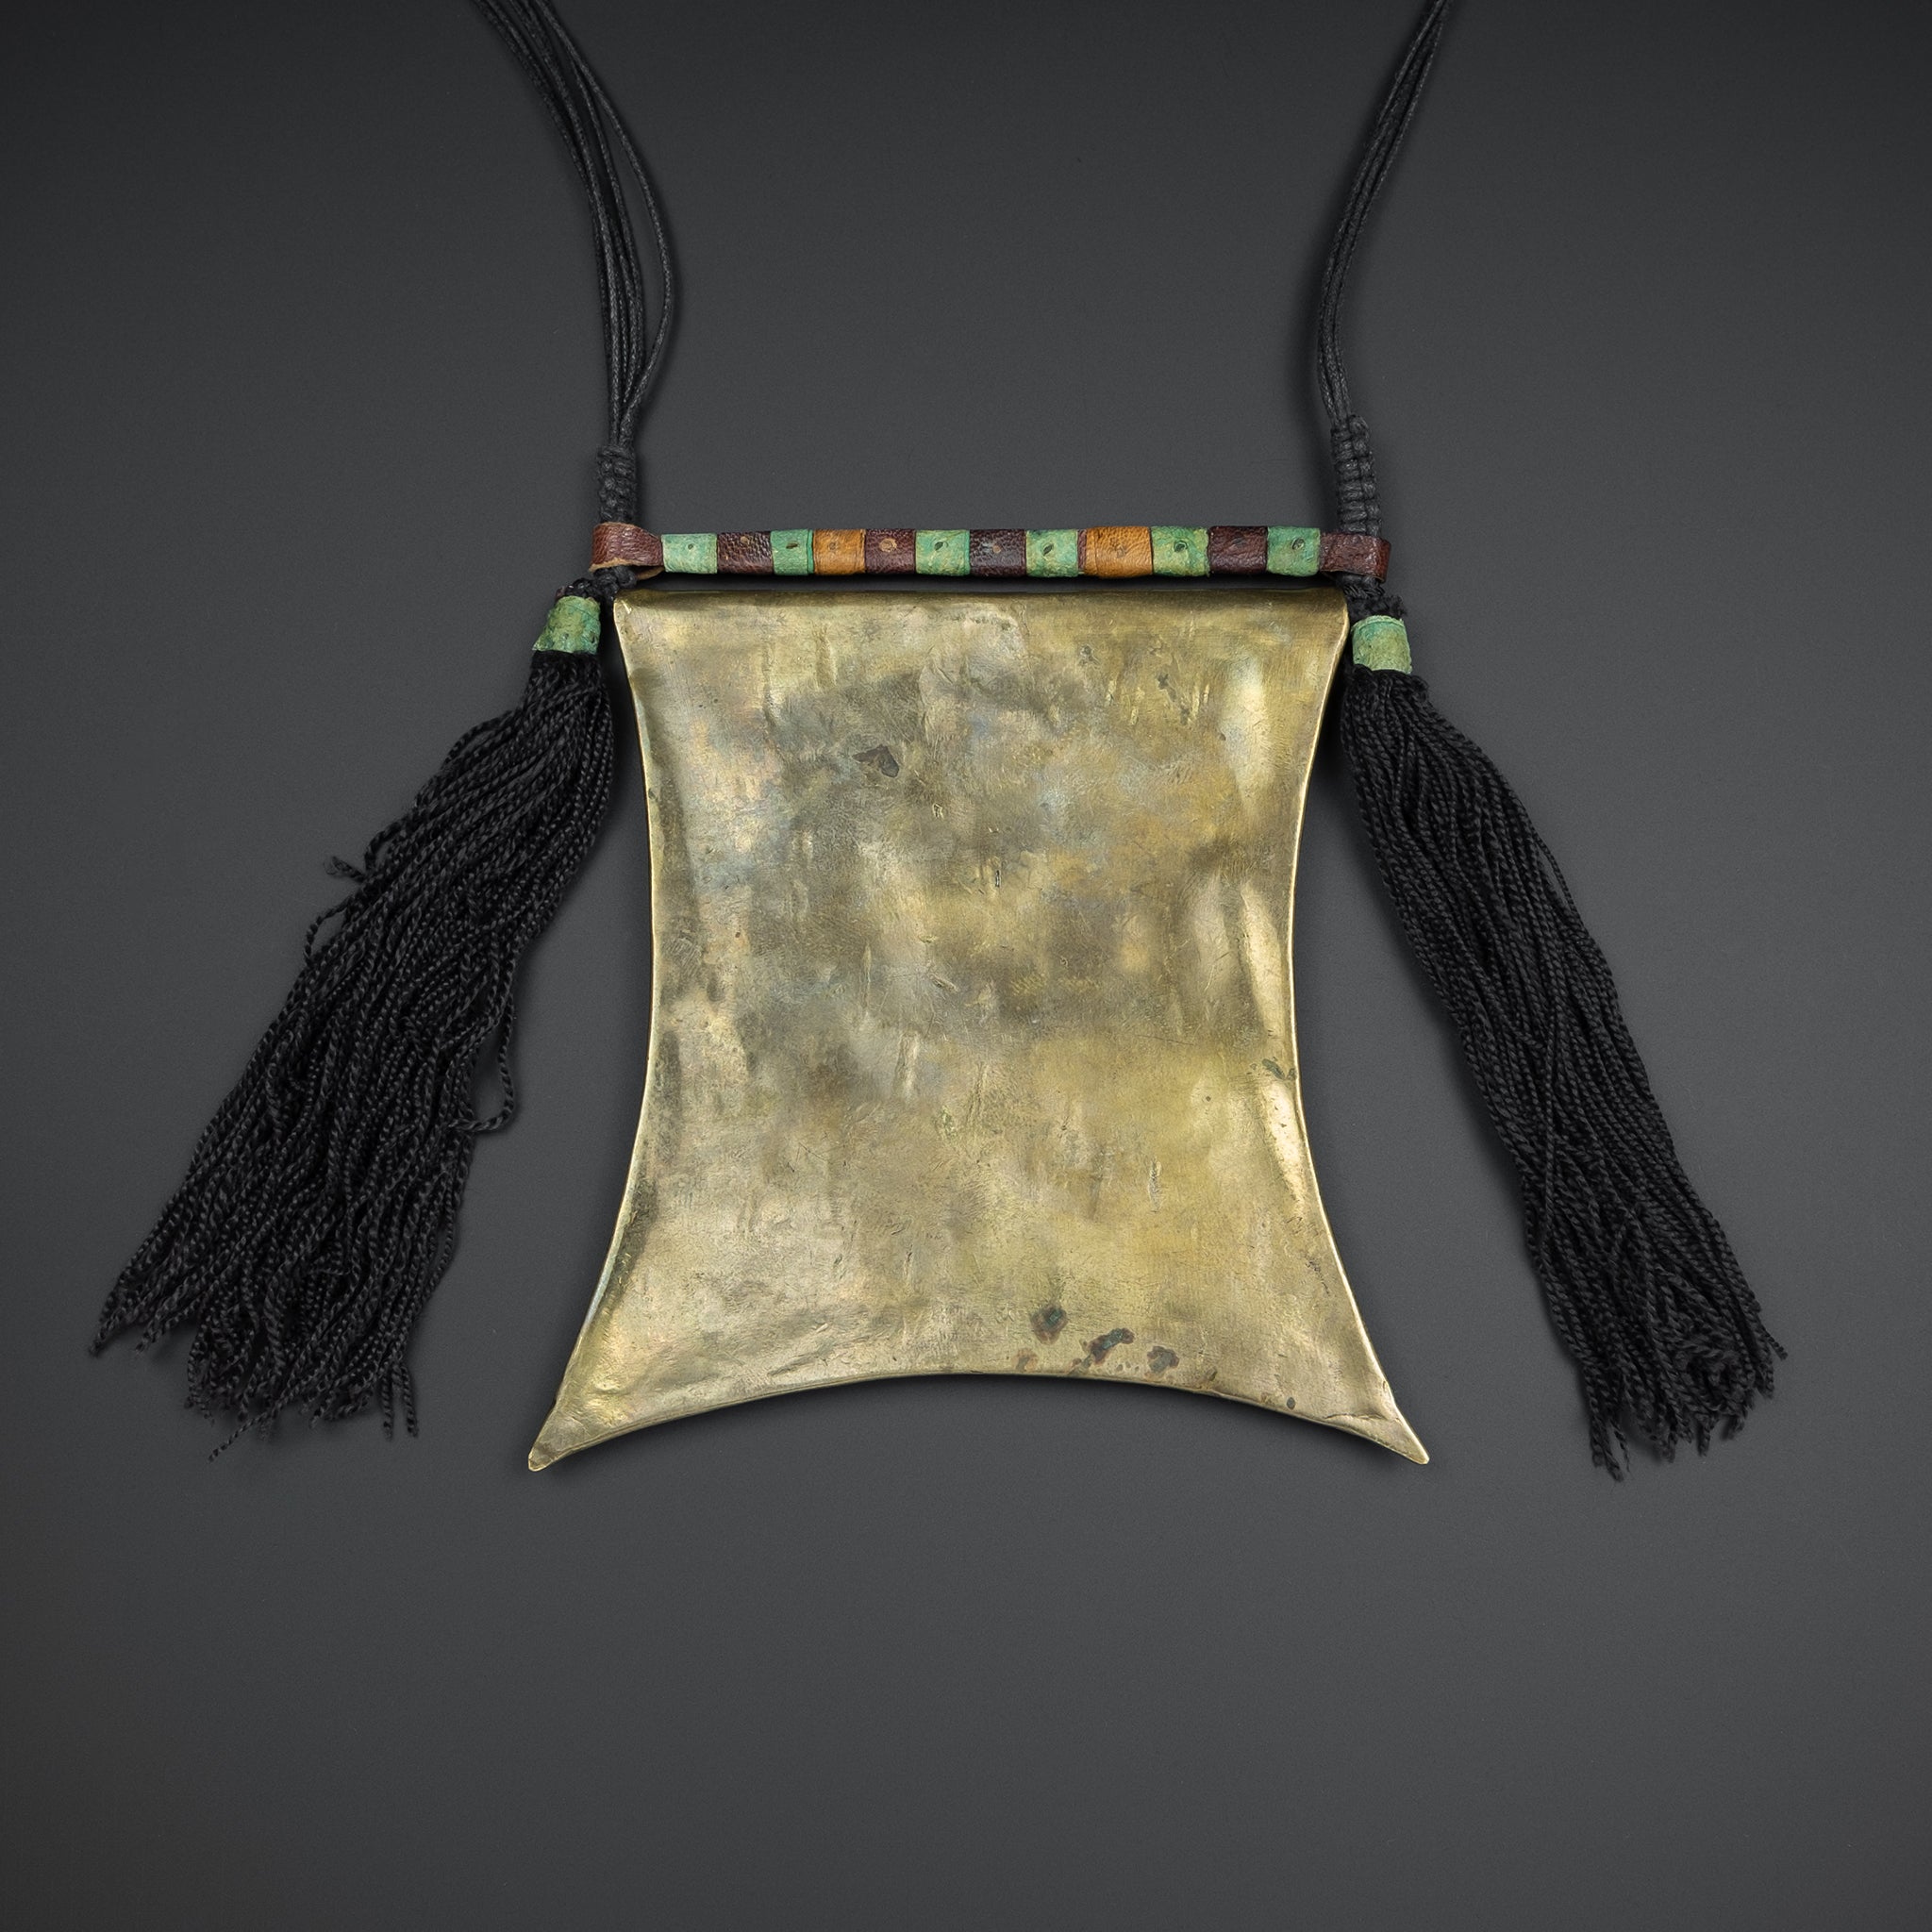 Vintage Brass, Silver and Copper Tuareg Tcherot Amulet – Large